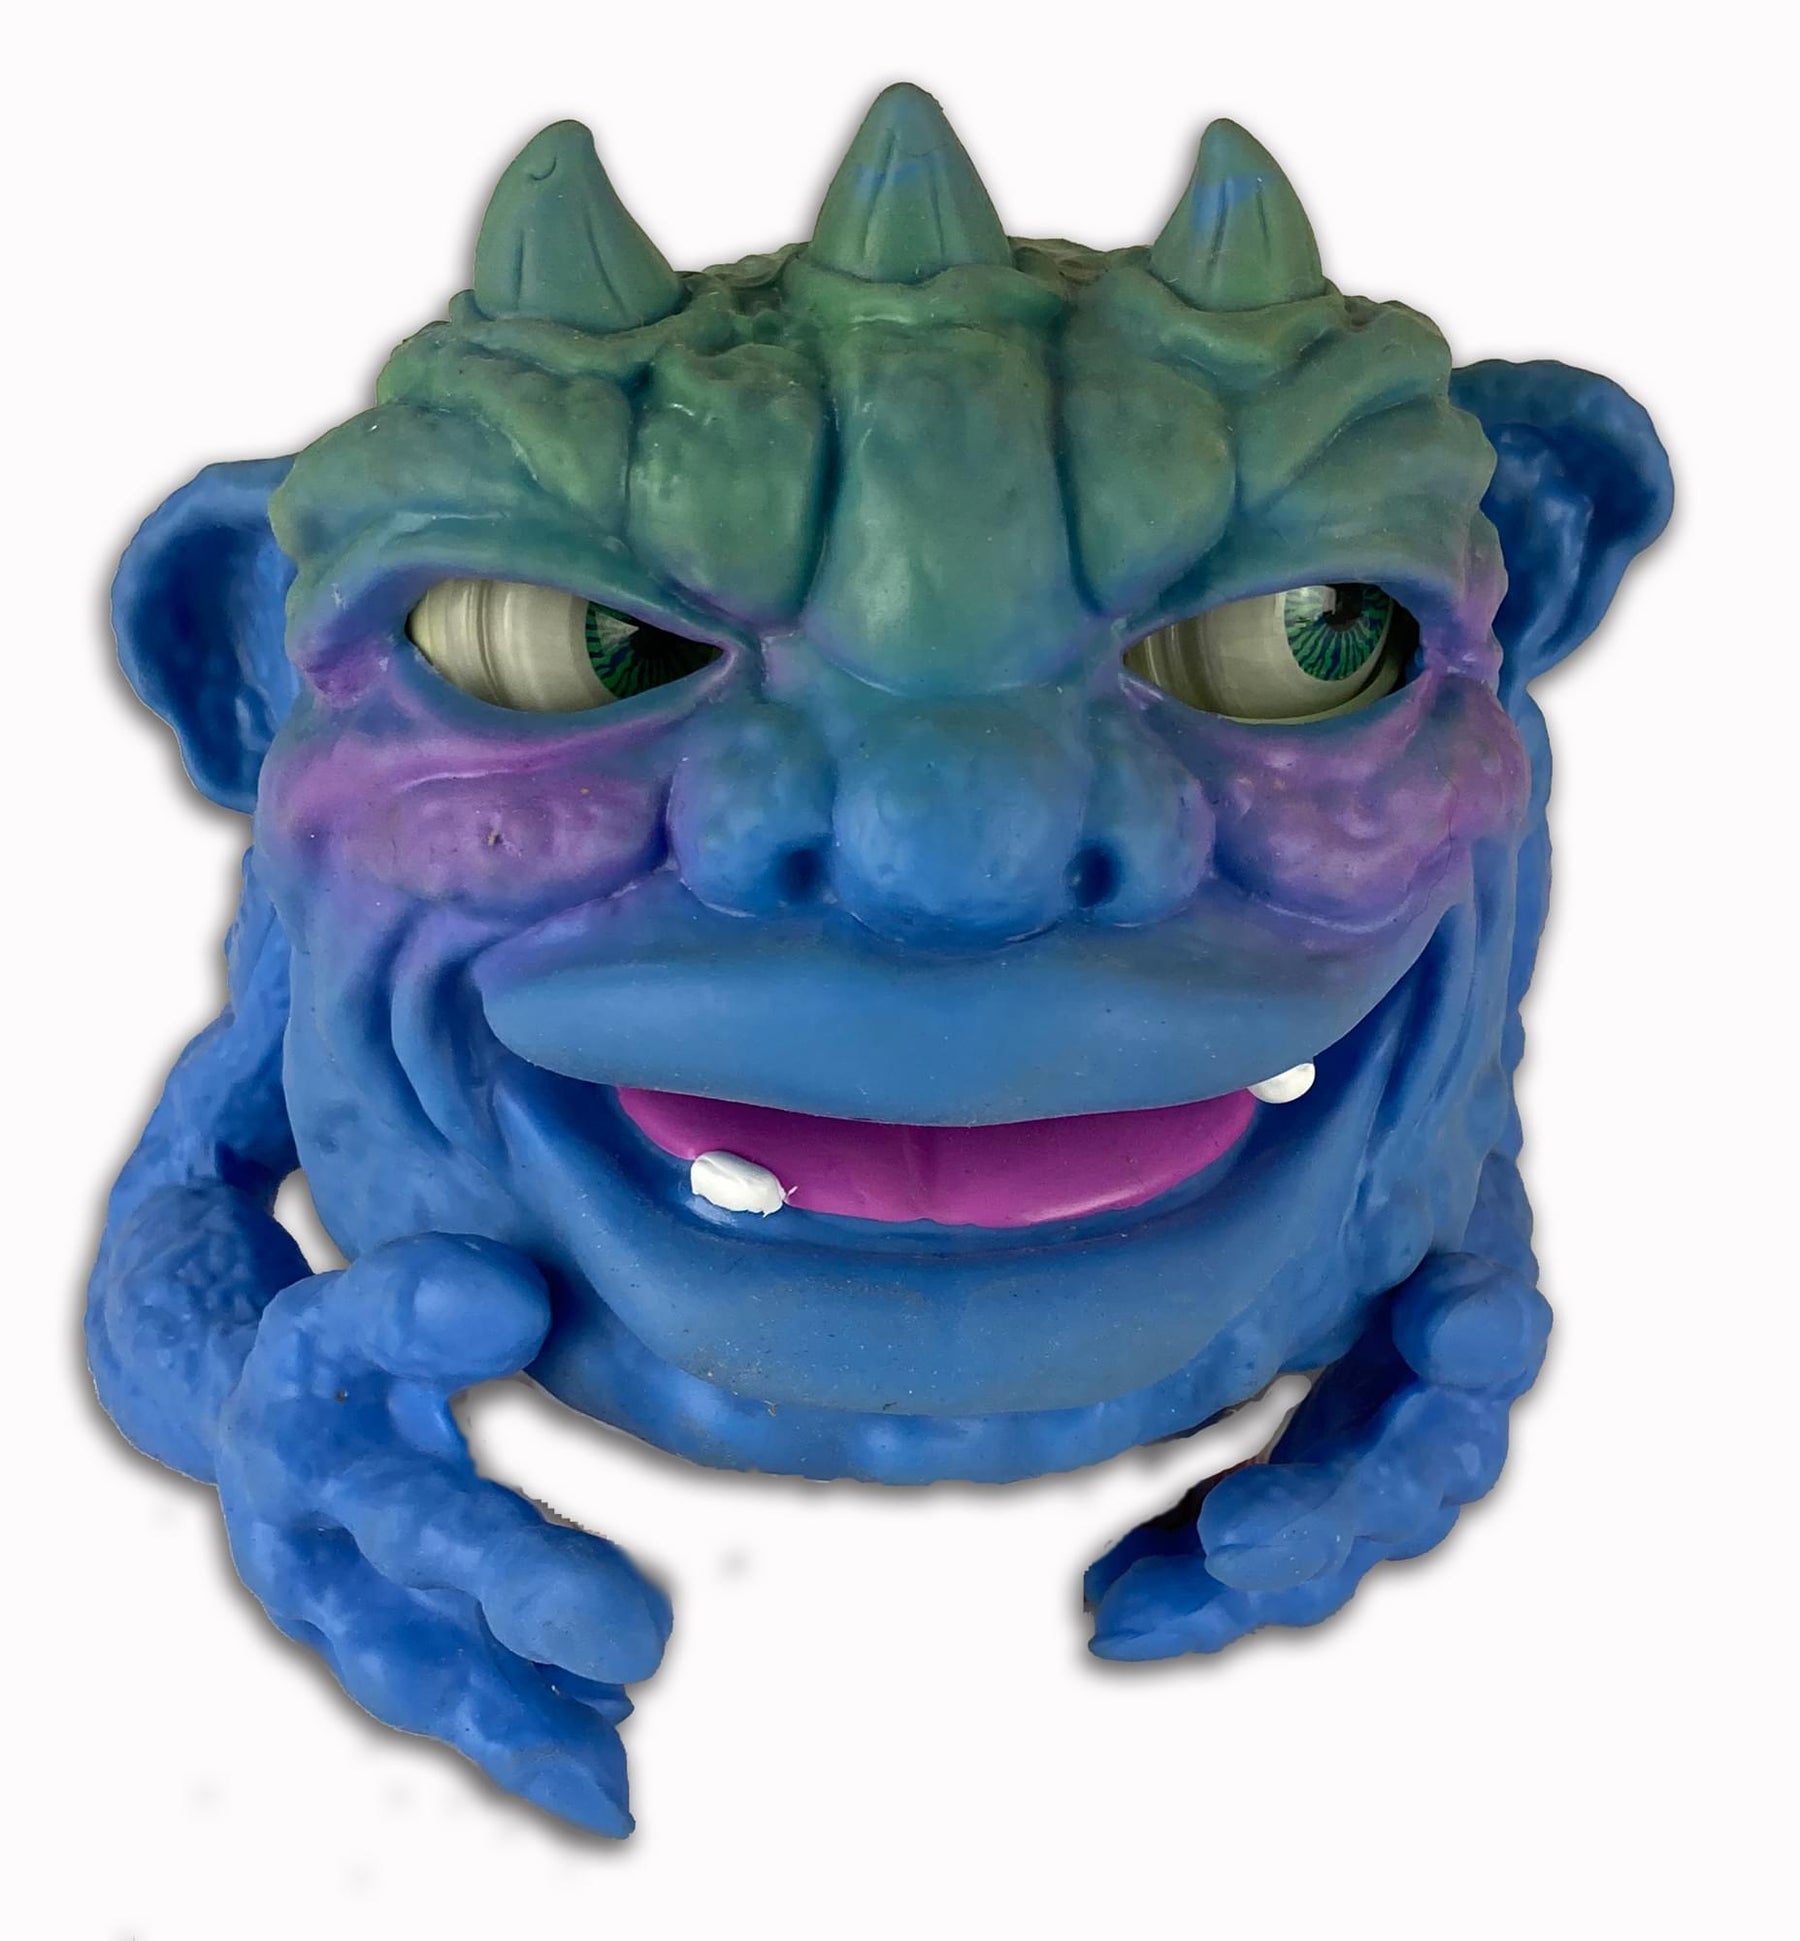 Boglins 8-Inch Foam Monster Puppet | King Vlobb